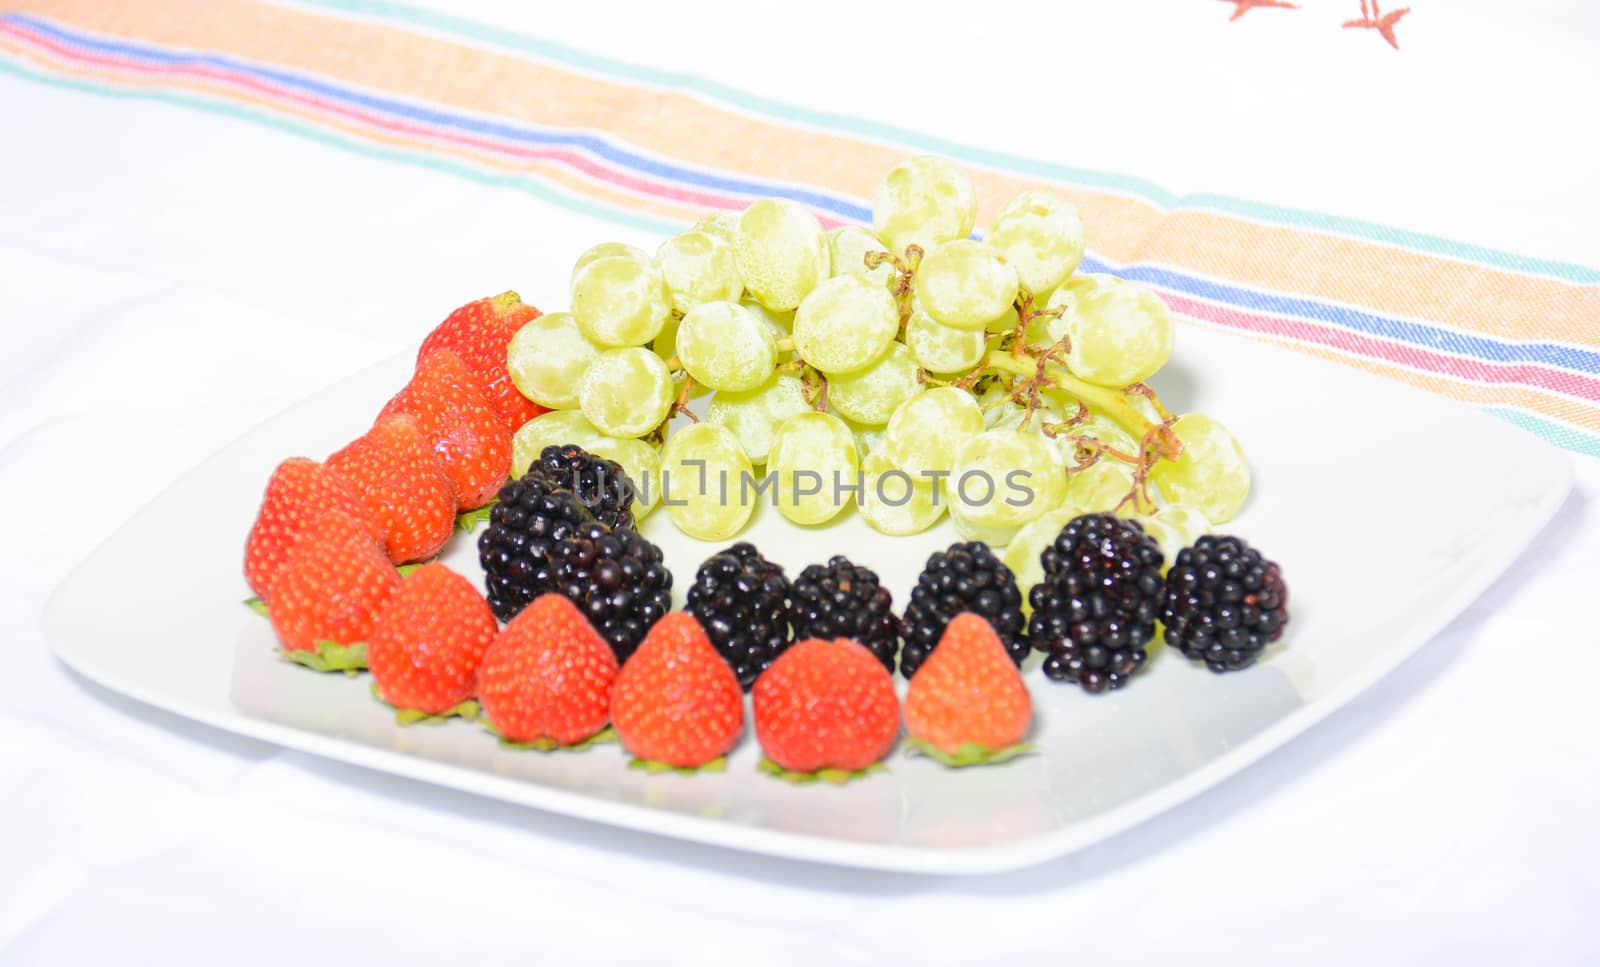 healthy fruits 24 by iacobino